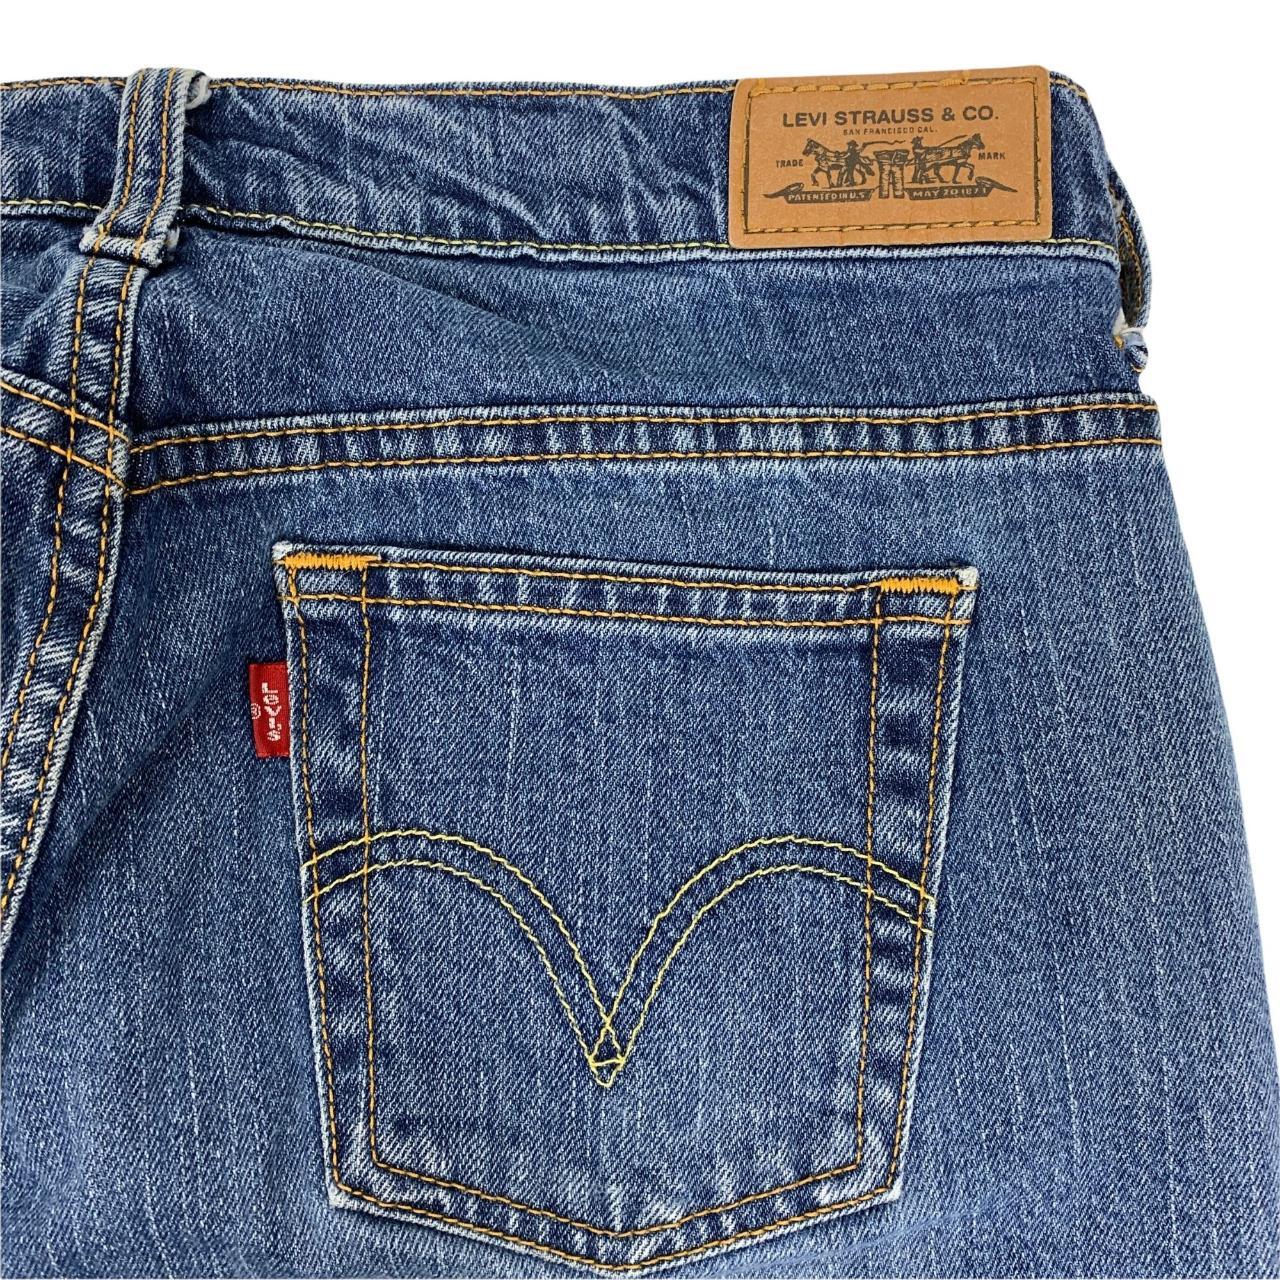 .Levi's 515 - boot cut, classic jeans. No holes or... - Depop